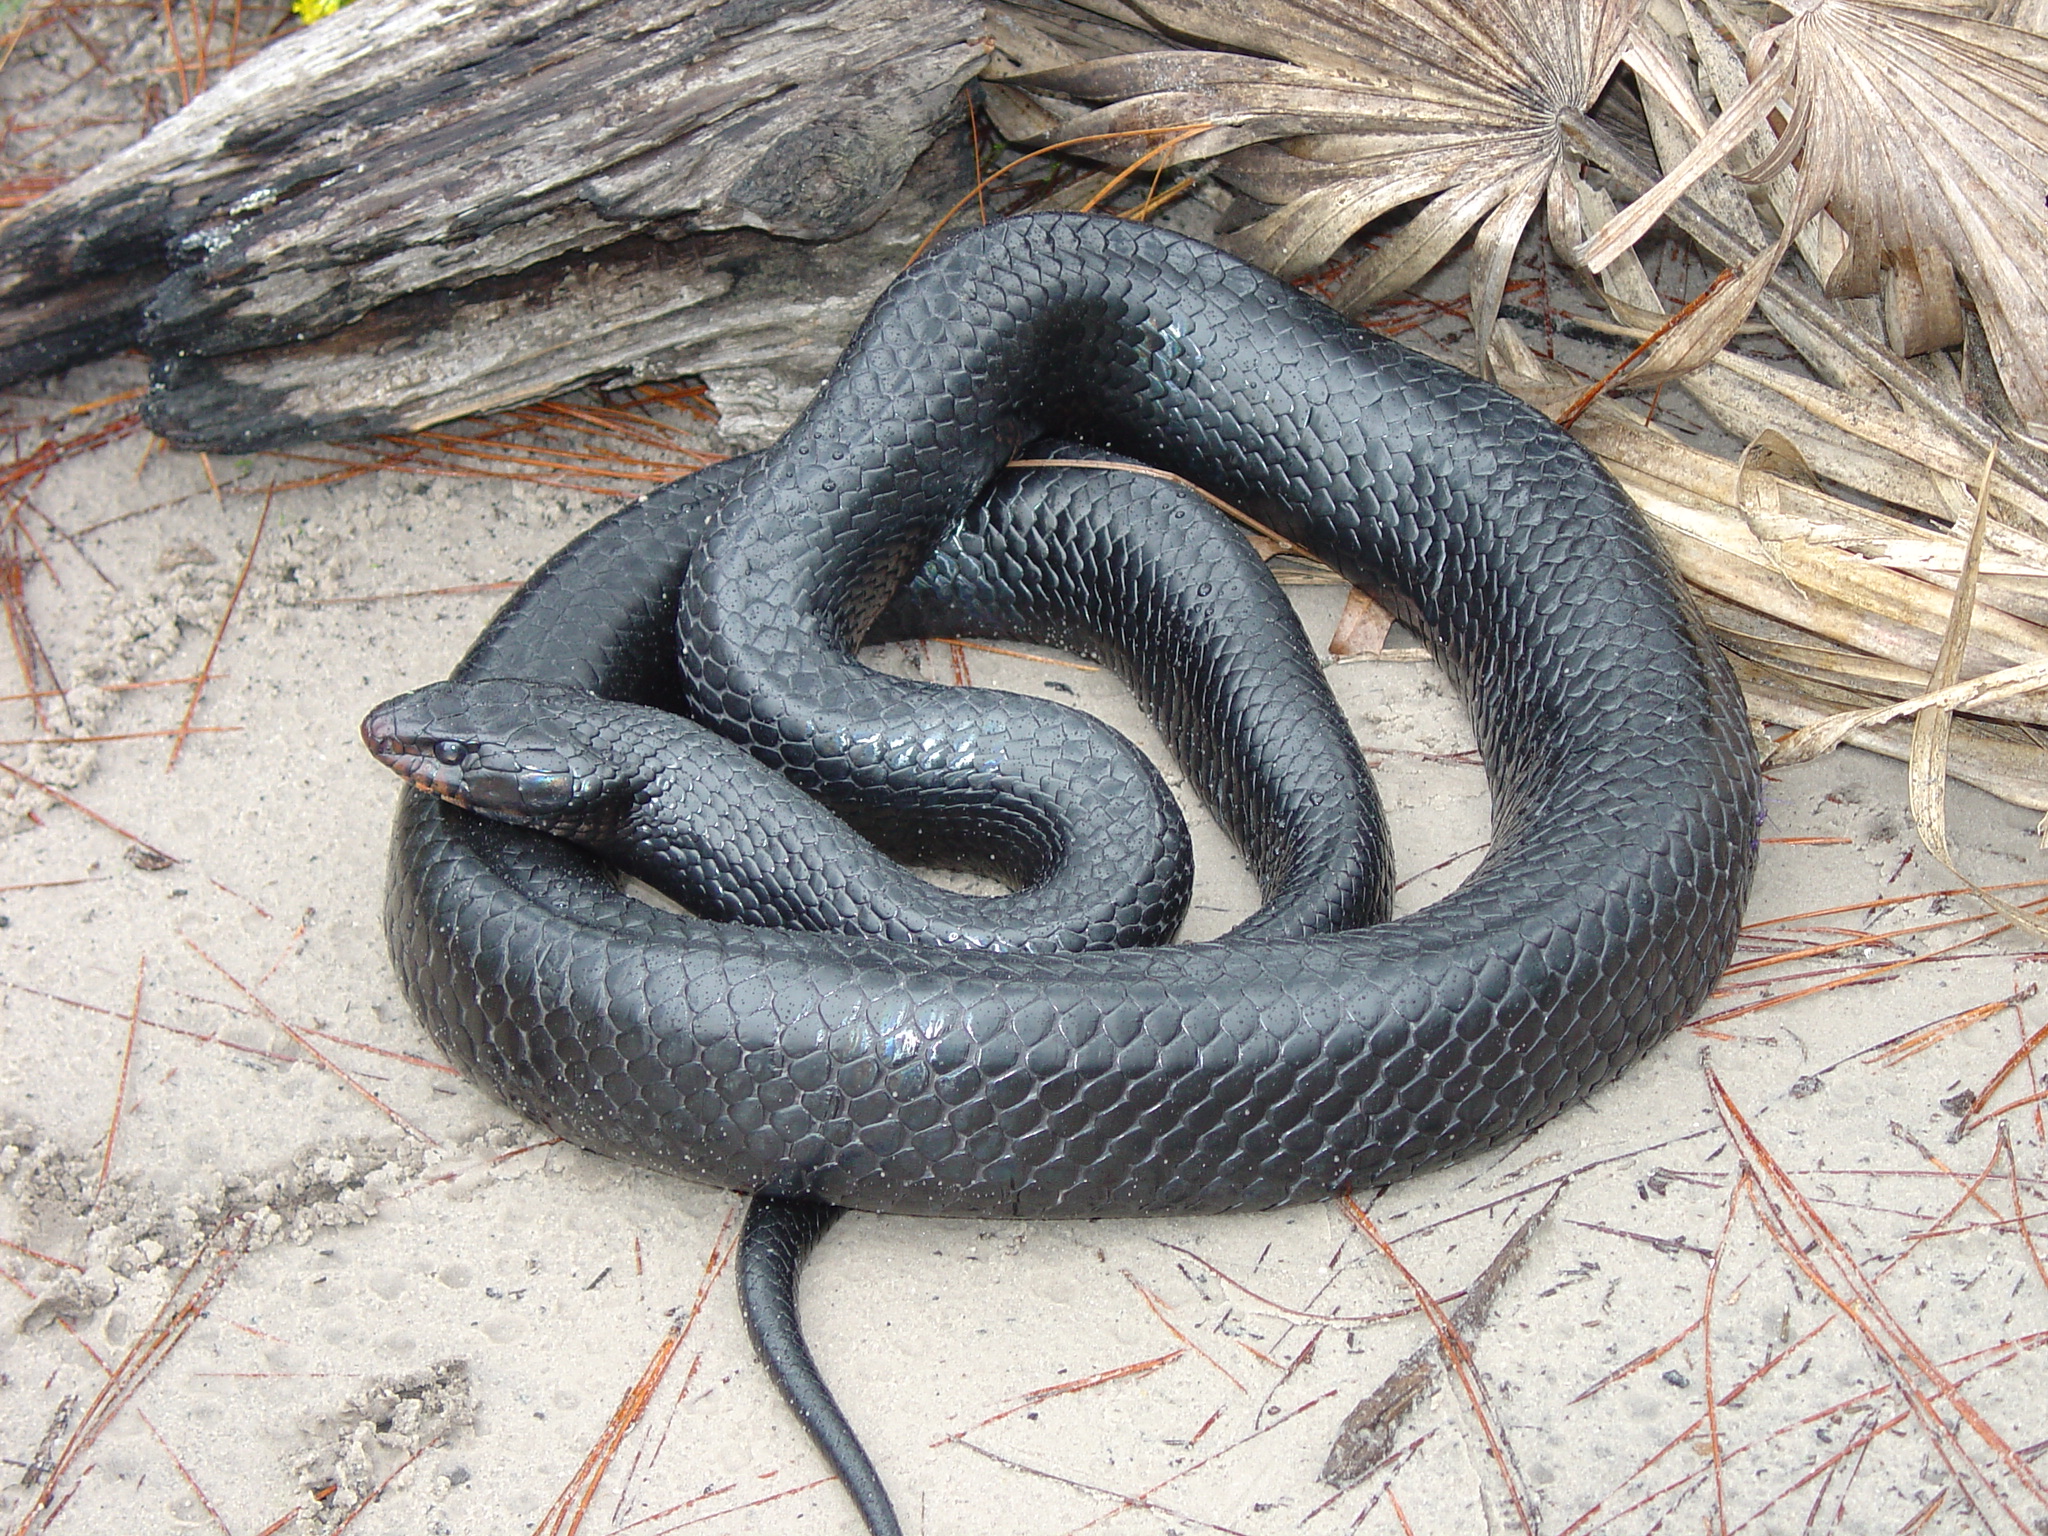 Eastern Indigo Snake on a sandy substrate